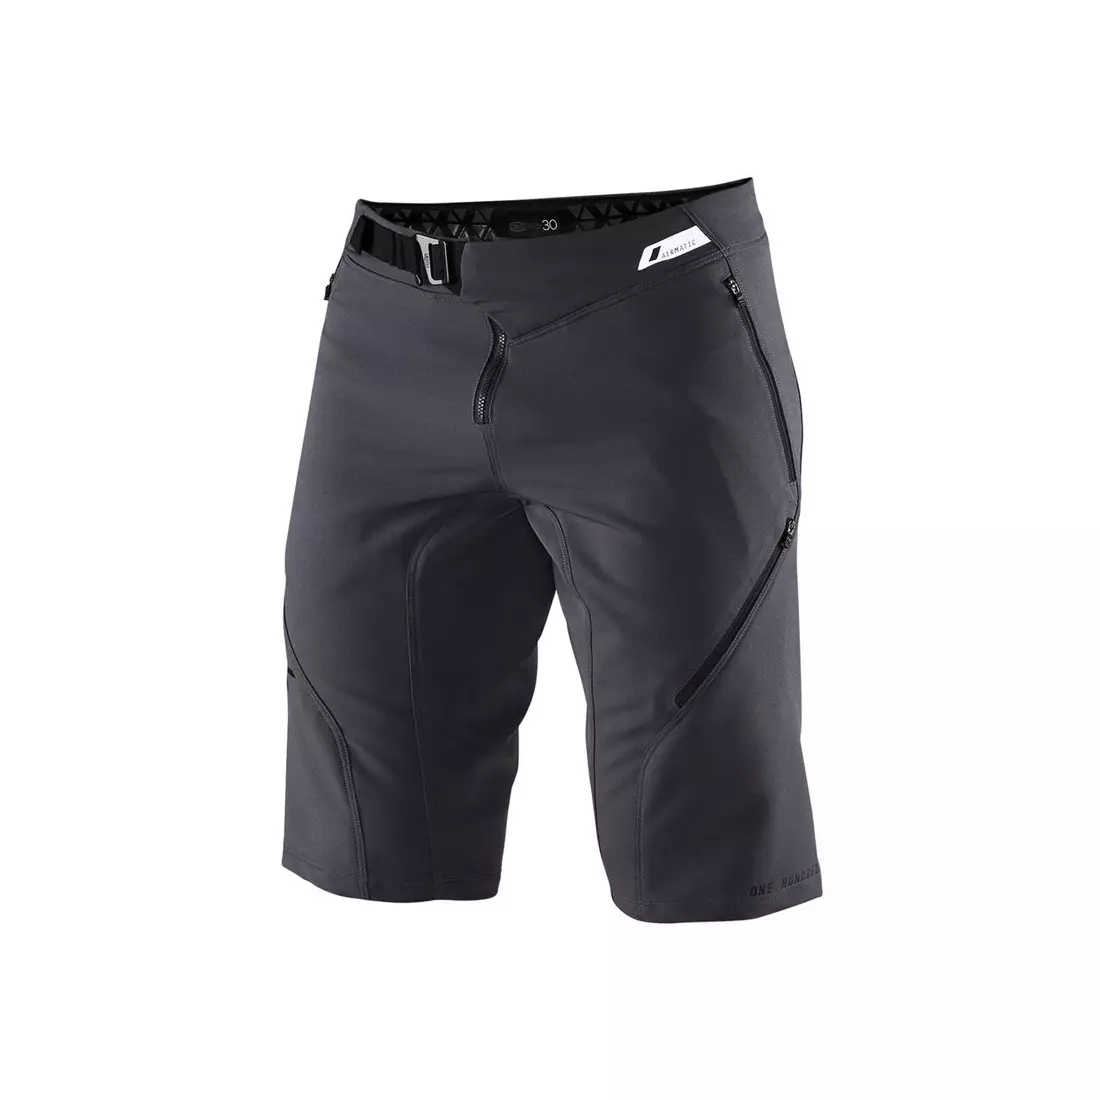 100% men's cycling shorts AIRMATIC charcoal STO-42317-052-28